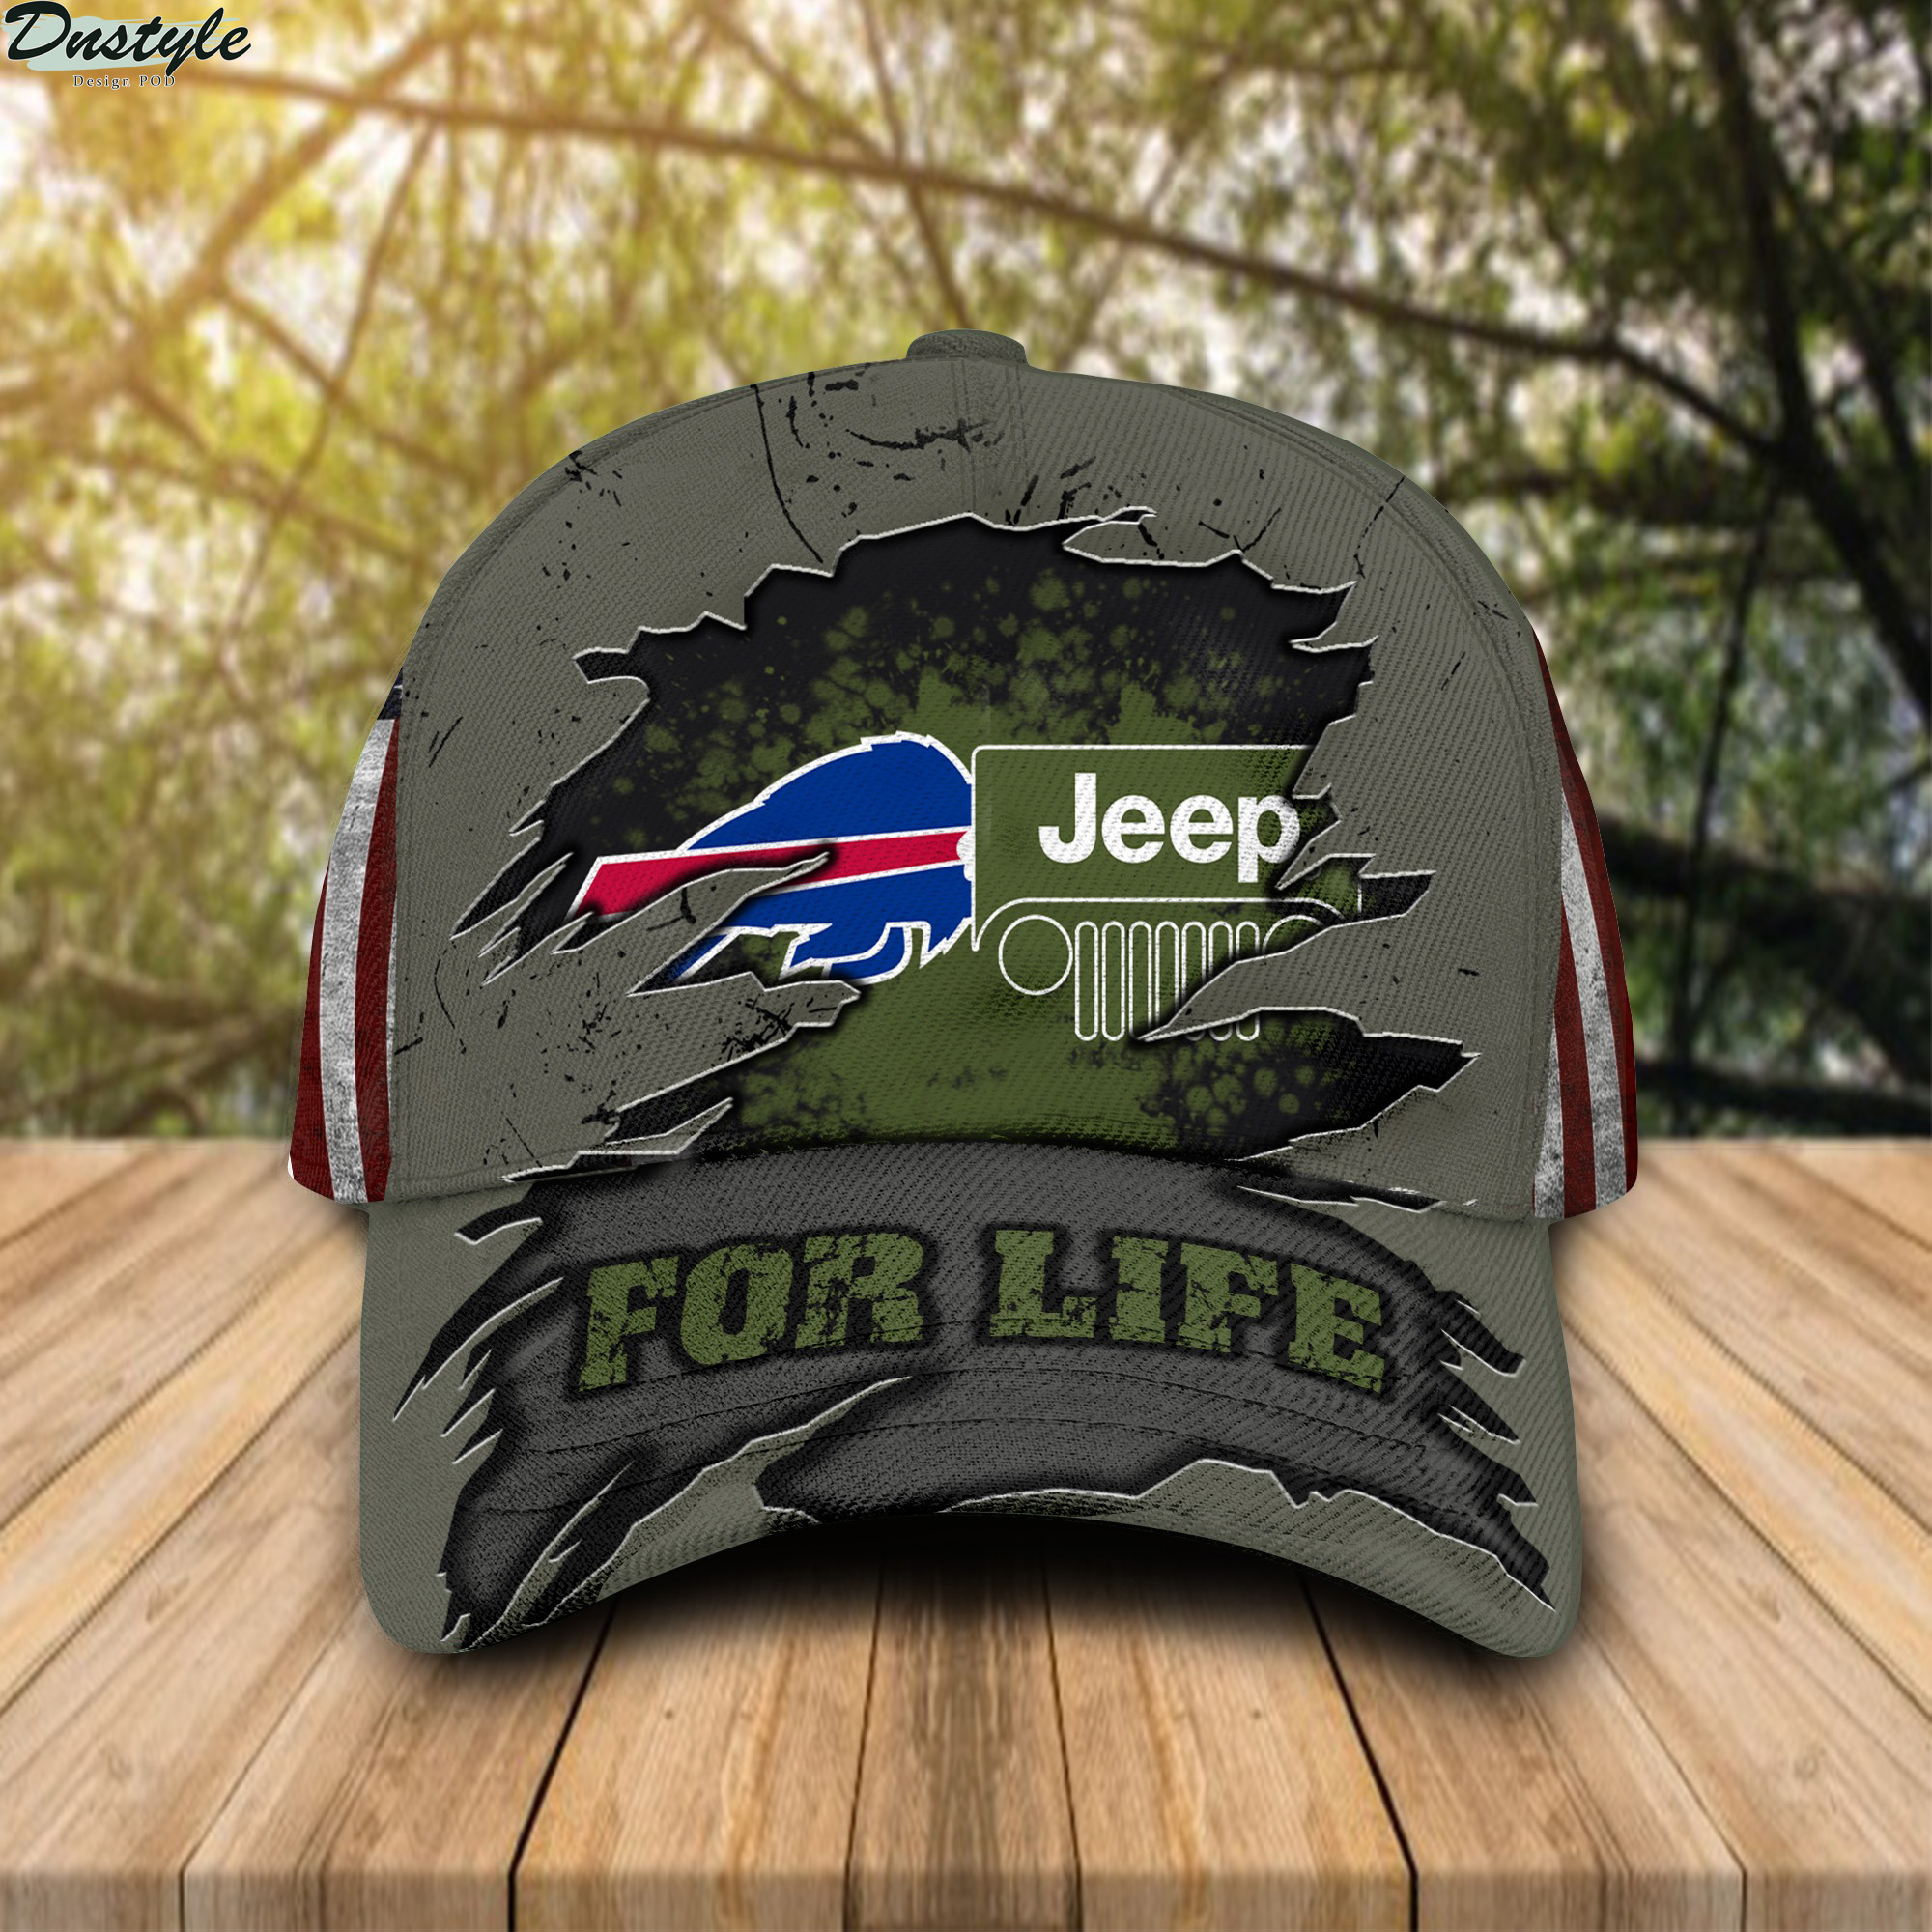 Buffalo Bills Jeep For Life Cap